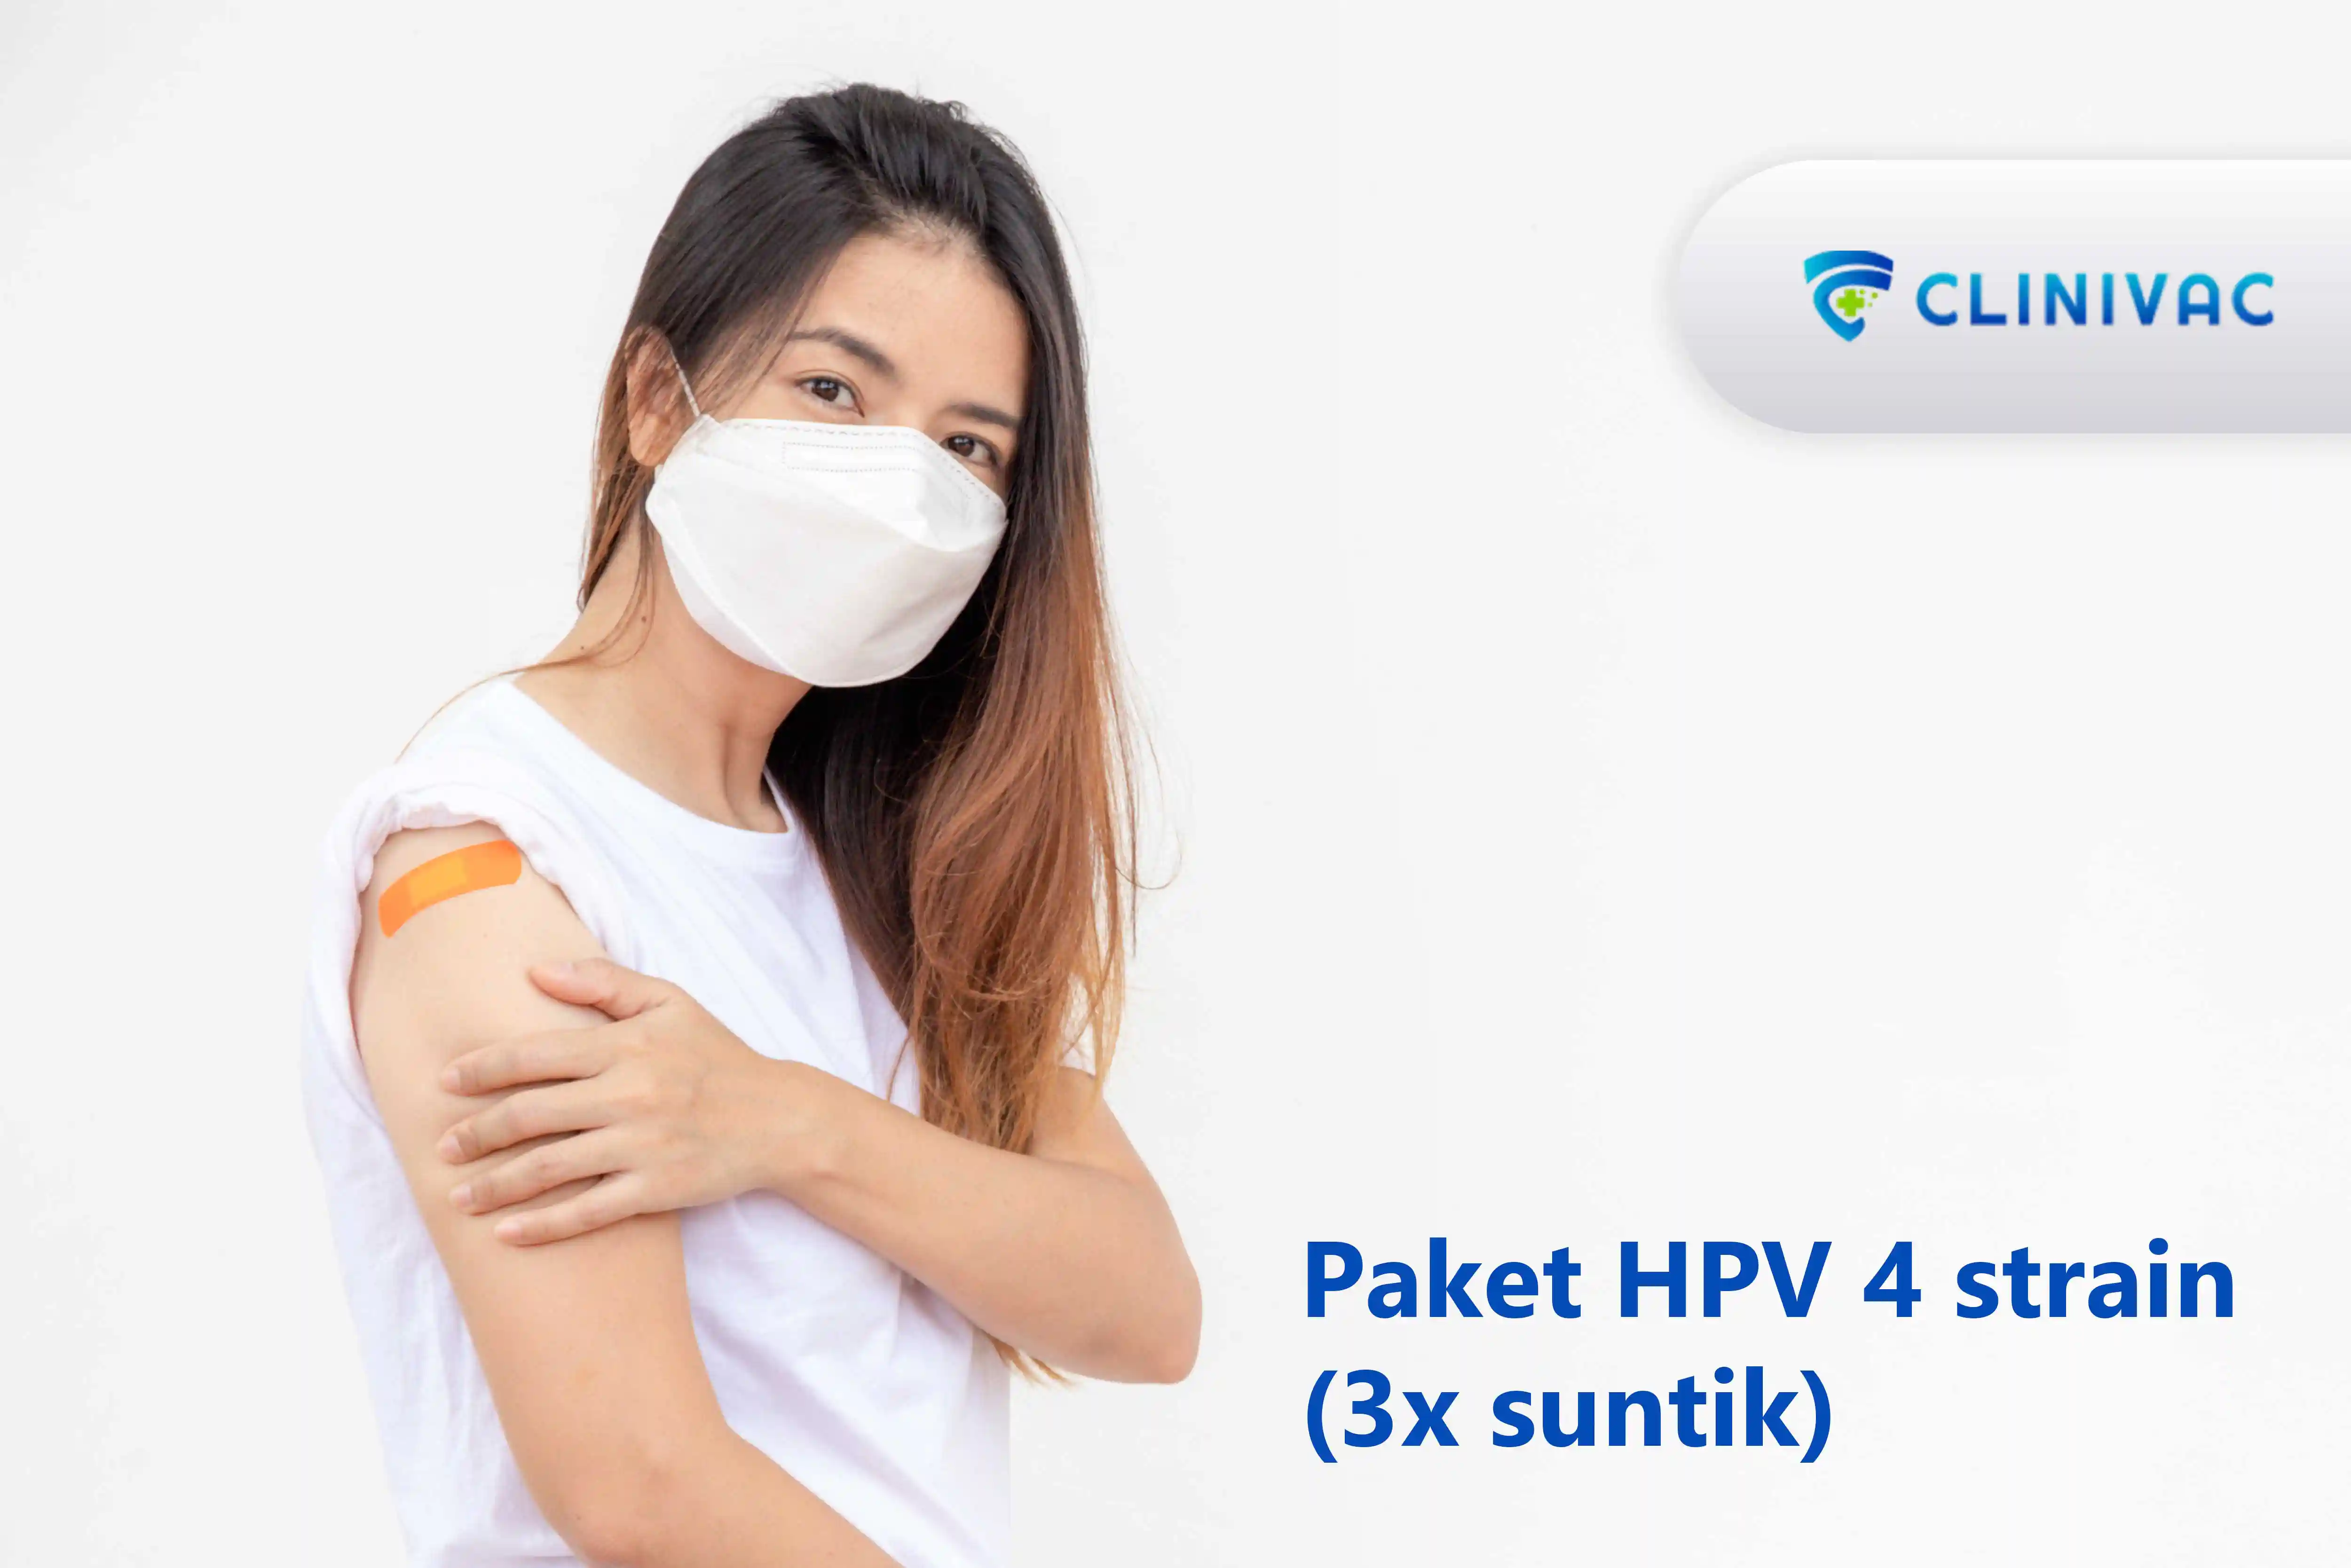 Clinivac---6.-Paket-HPV-4-strain-(3x-suntik) copy_1715739654.webp